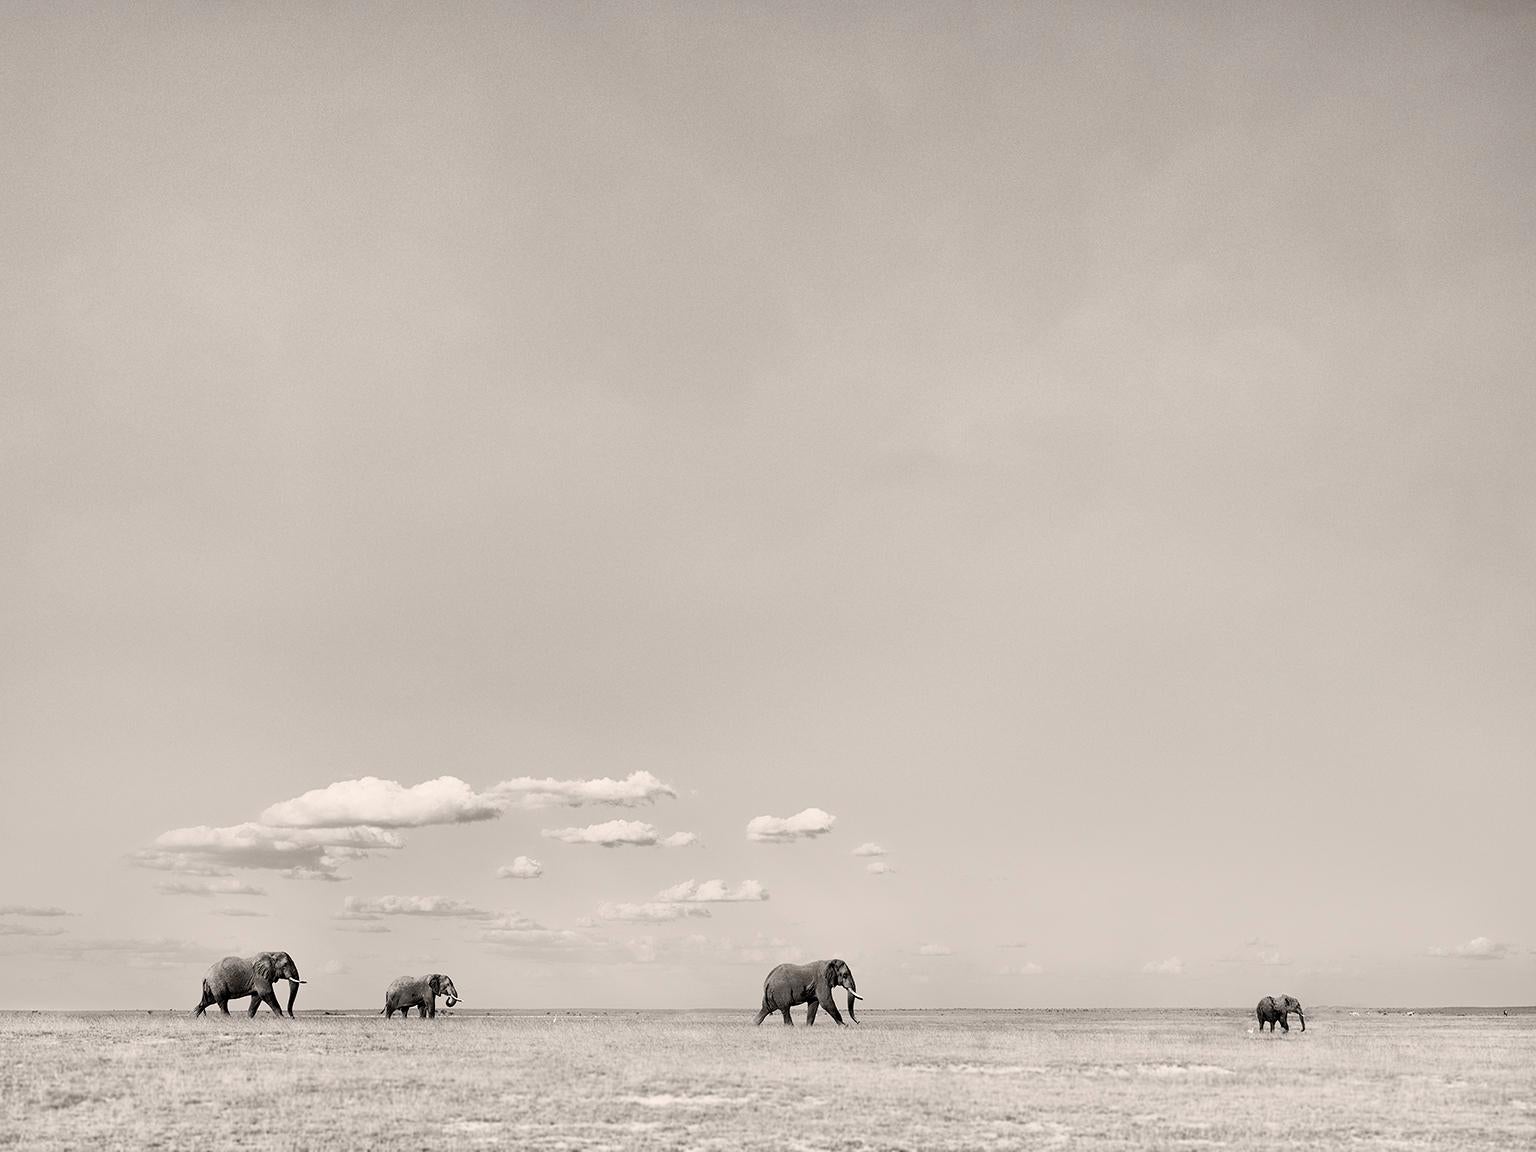 Joachim Schmeisser Landscape Photograph - Tomorrow's leader, animal, wildlife, black and white photography, elephant